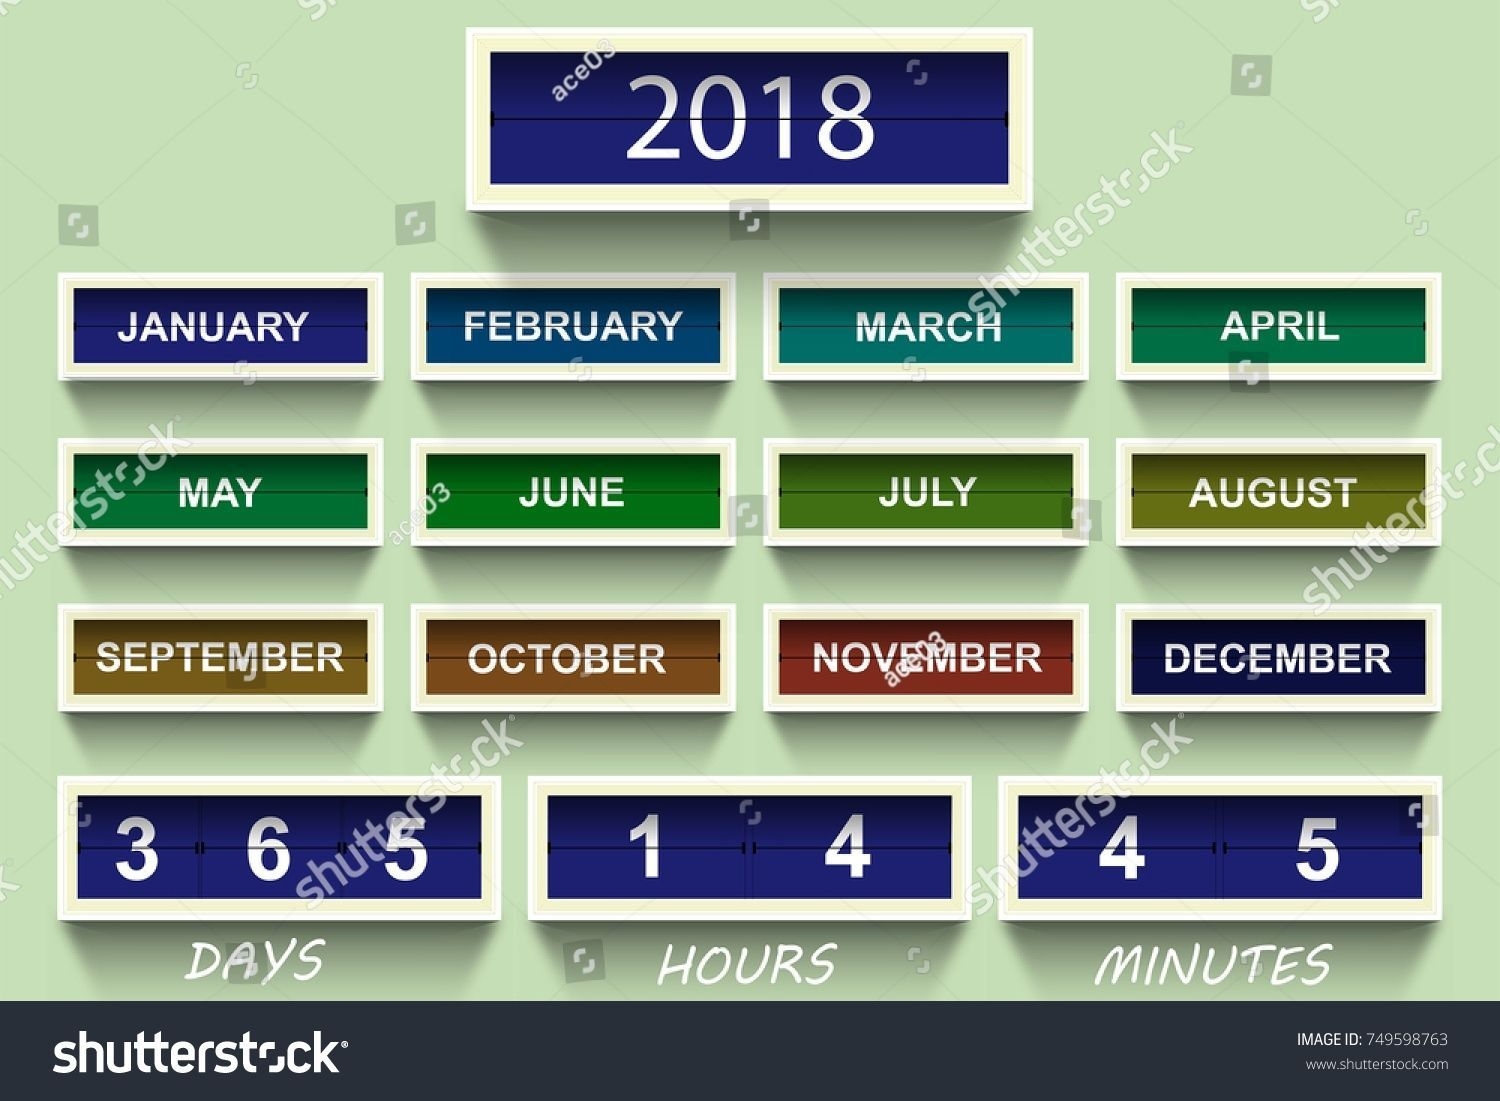 6 Month Countdown Calendar In 2020 | Countdown Calendar